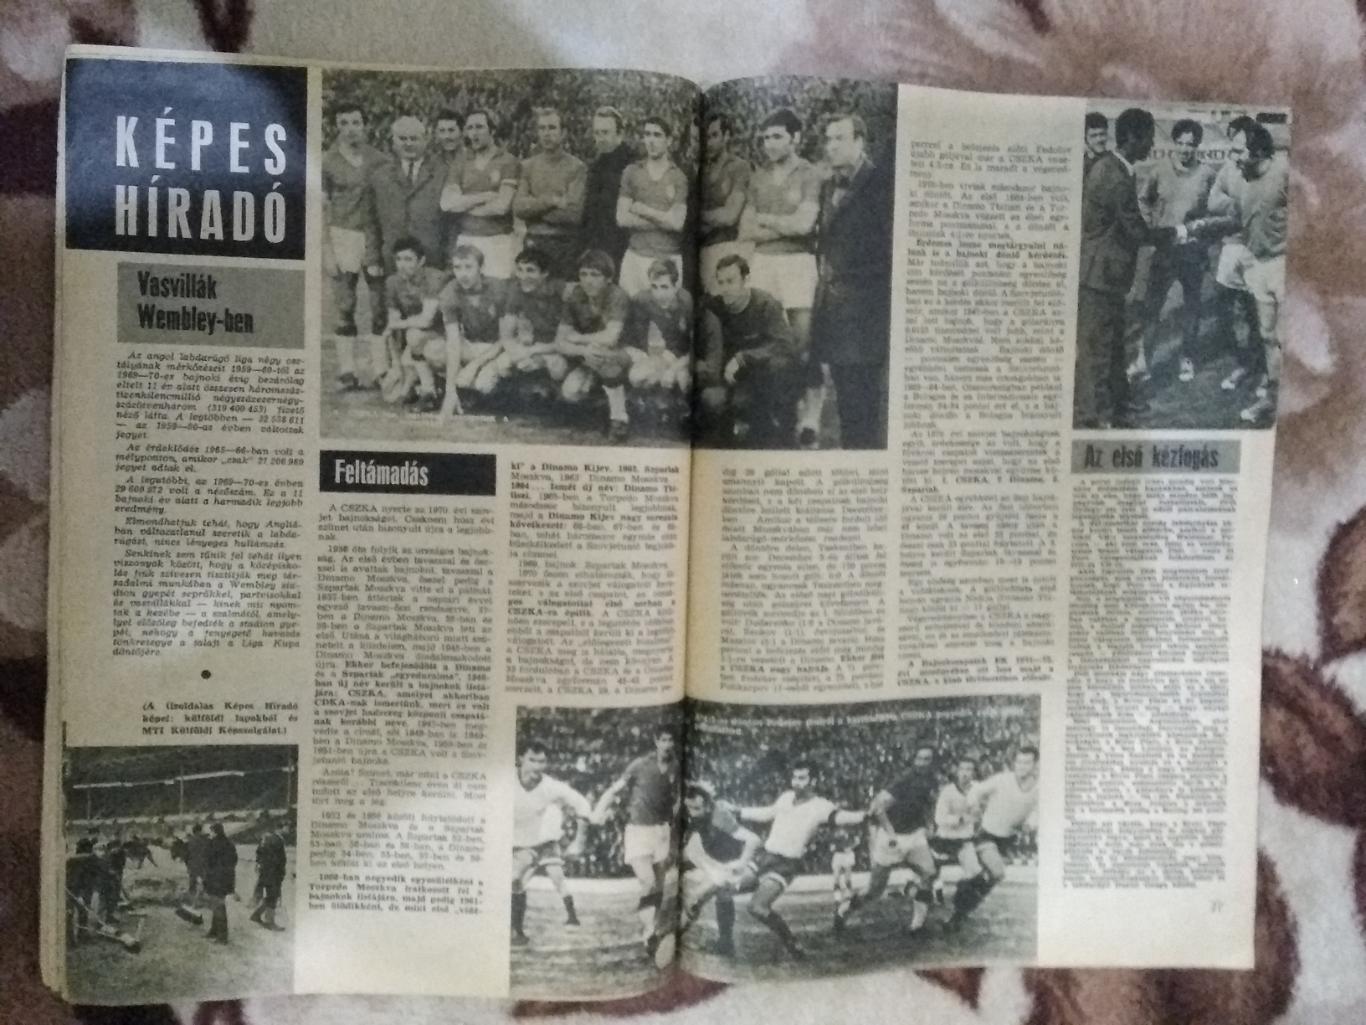 Журнал.Футбол.Лабдаругаш № 1 1971 г. (Венгрия). 1